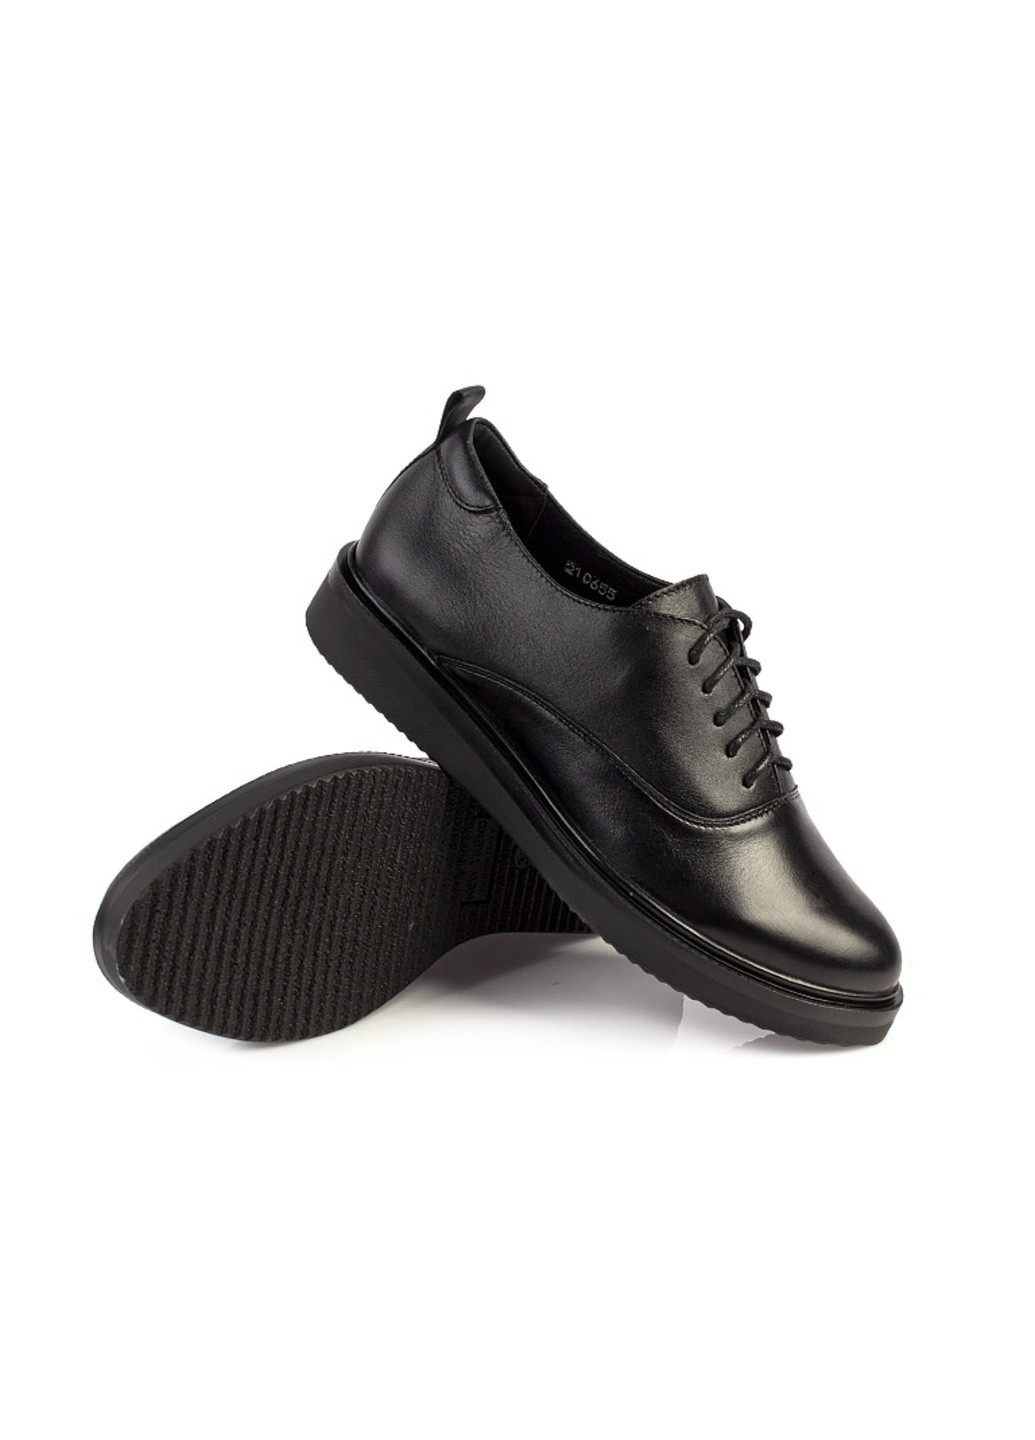 Туфлі жіночі бренду 8401308_(1) ModaMilano (257375942)